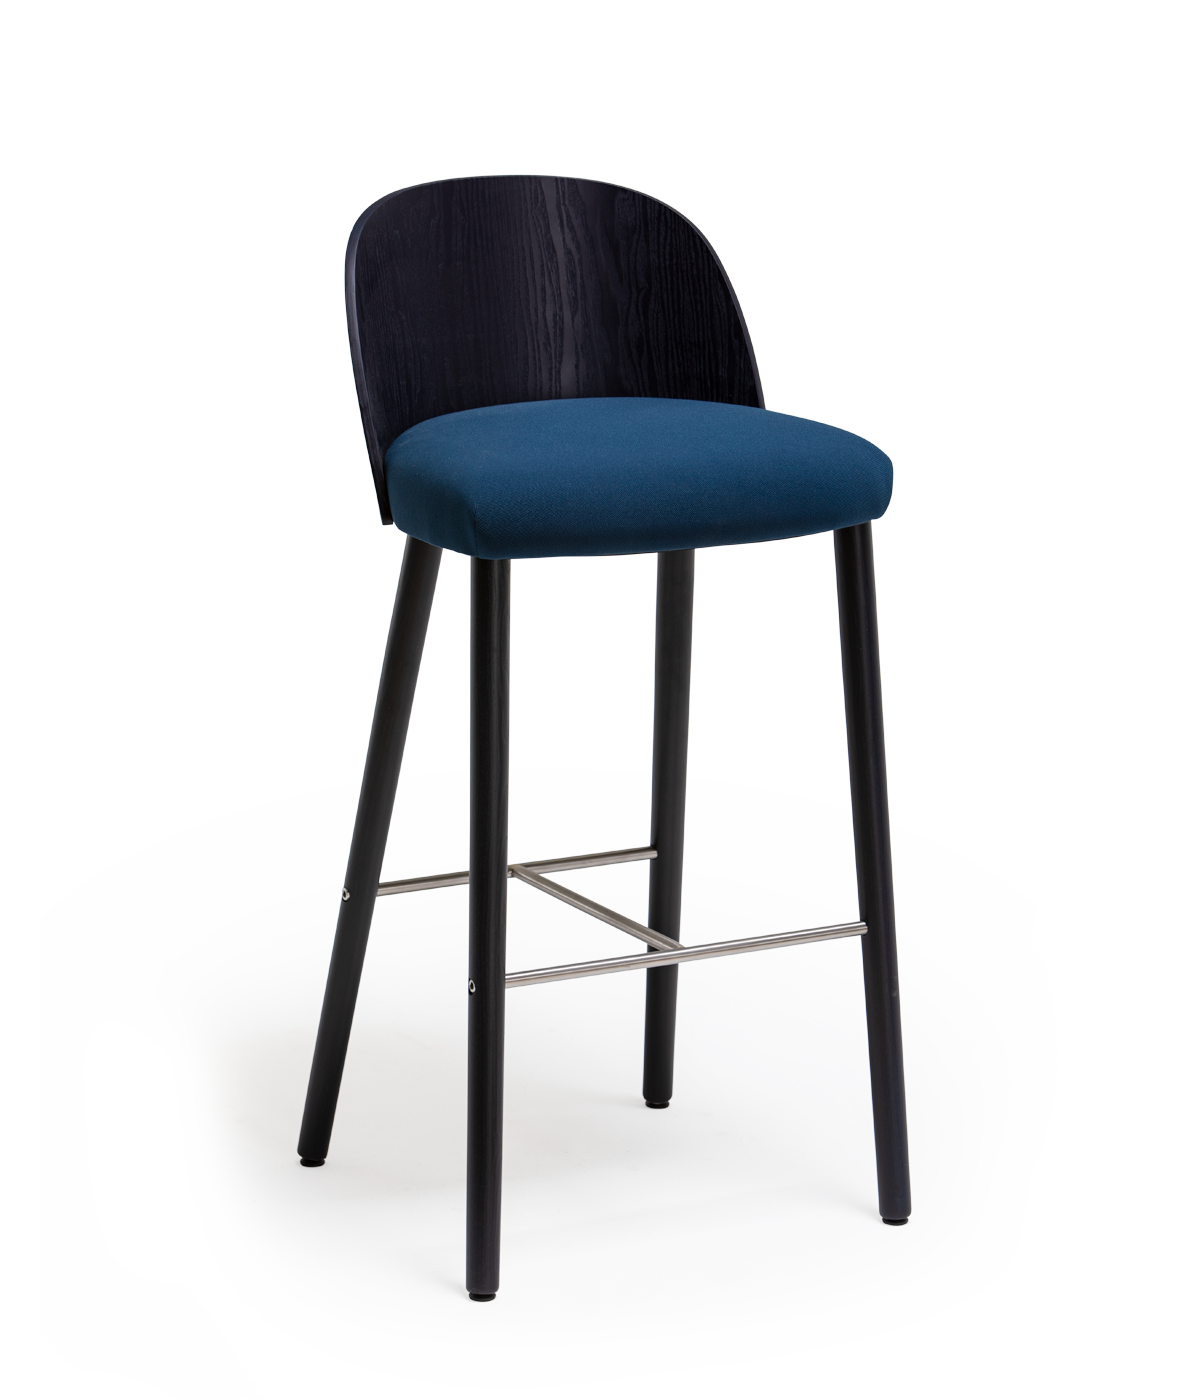 Cistell Slim high stool with wooden legs - Vergés